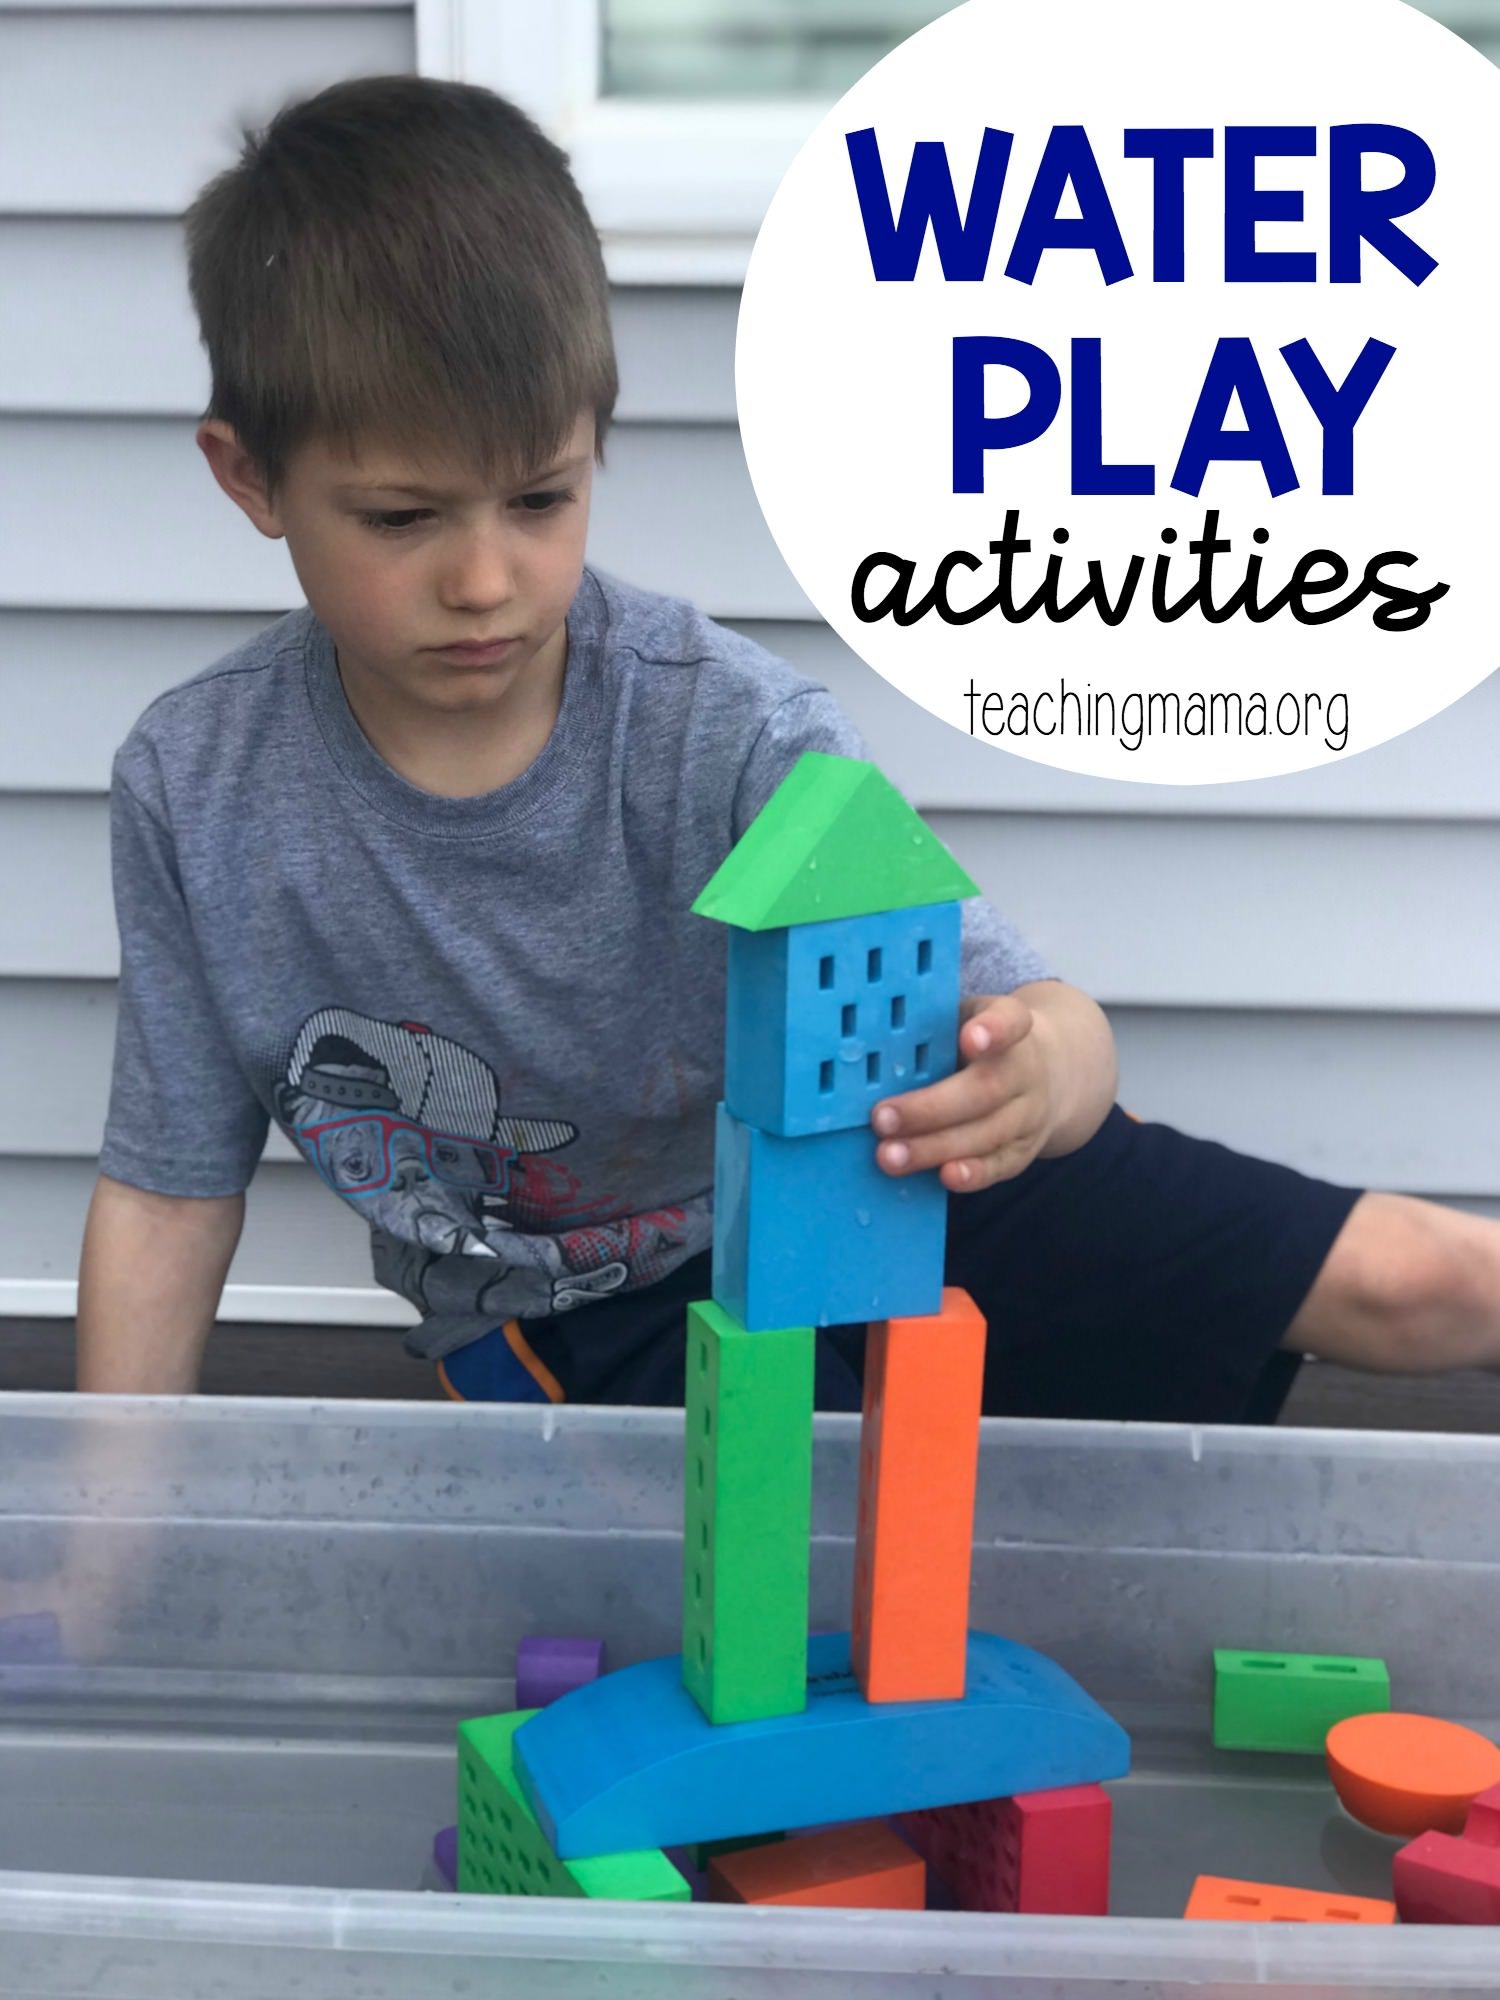 Water Play Activities for Kids